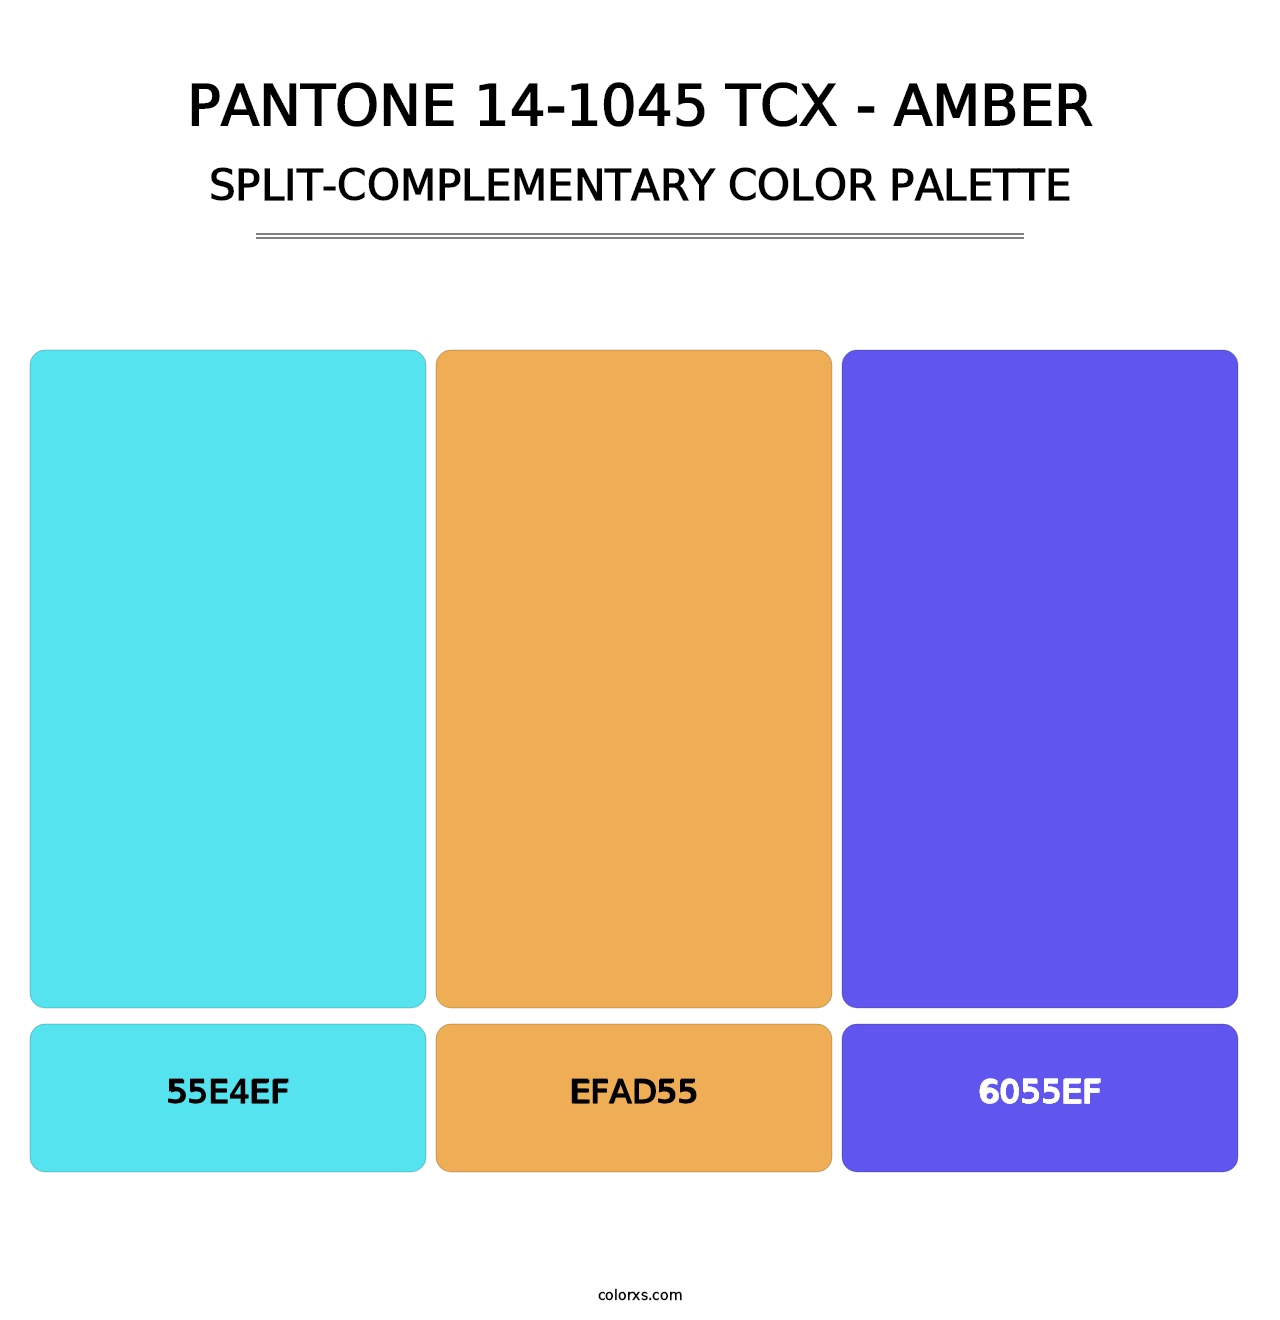 PANTONE 14-1045 TCX - Amber - Split-Complementary Color Palette